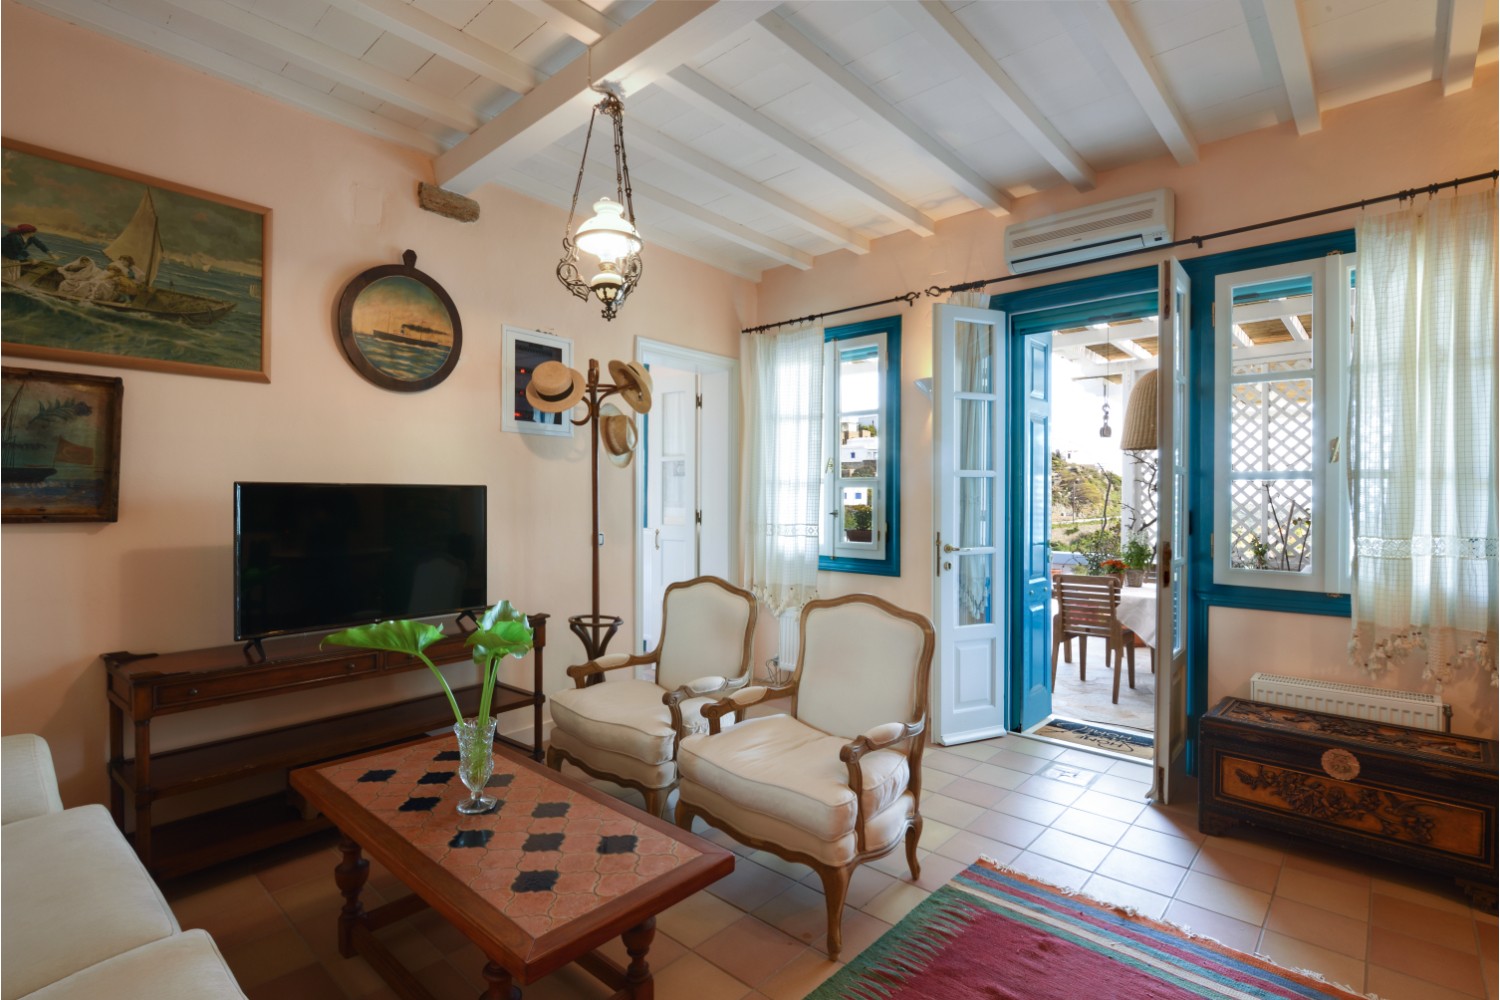 Amalgam Homes Pano Spiti villa, Tinos island: image interior gallery